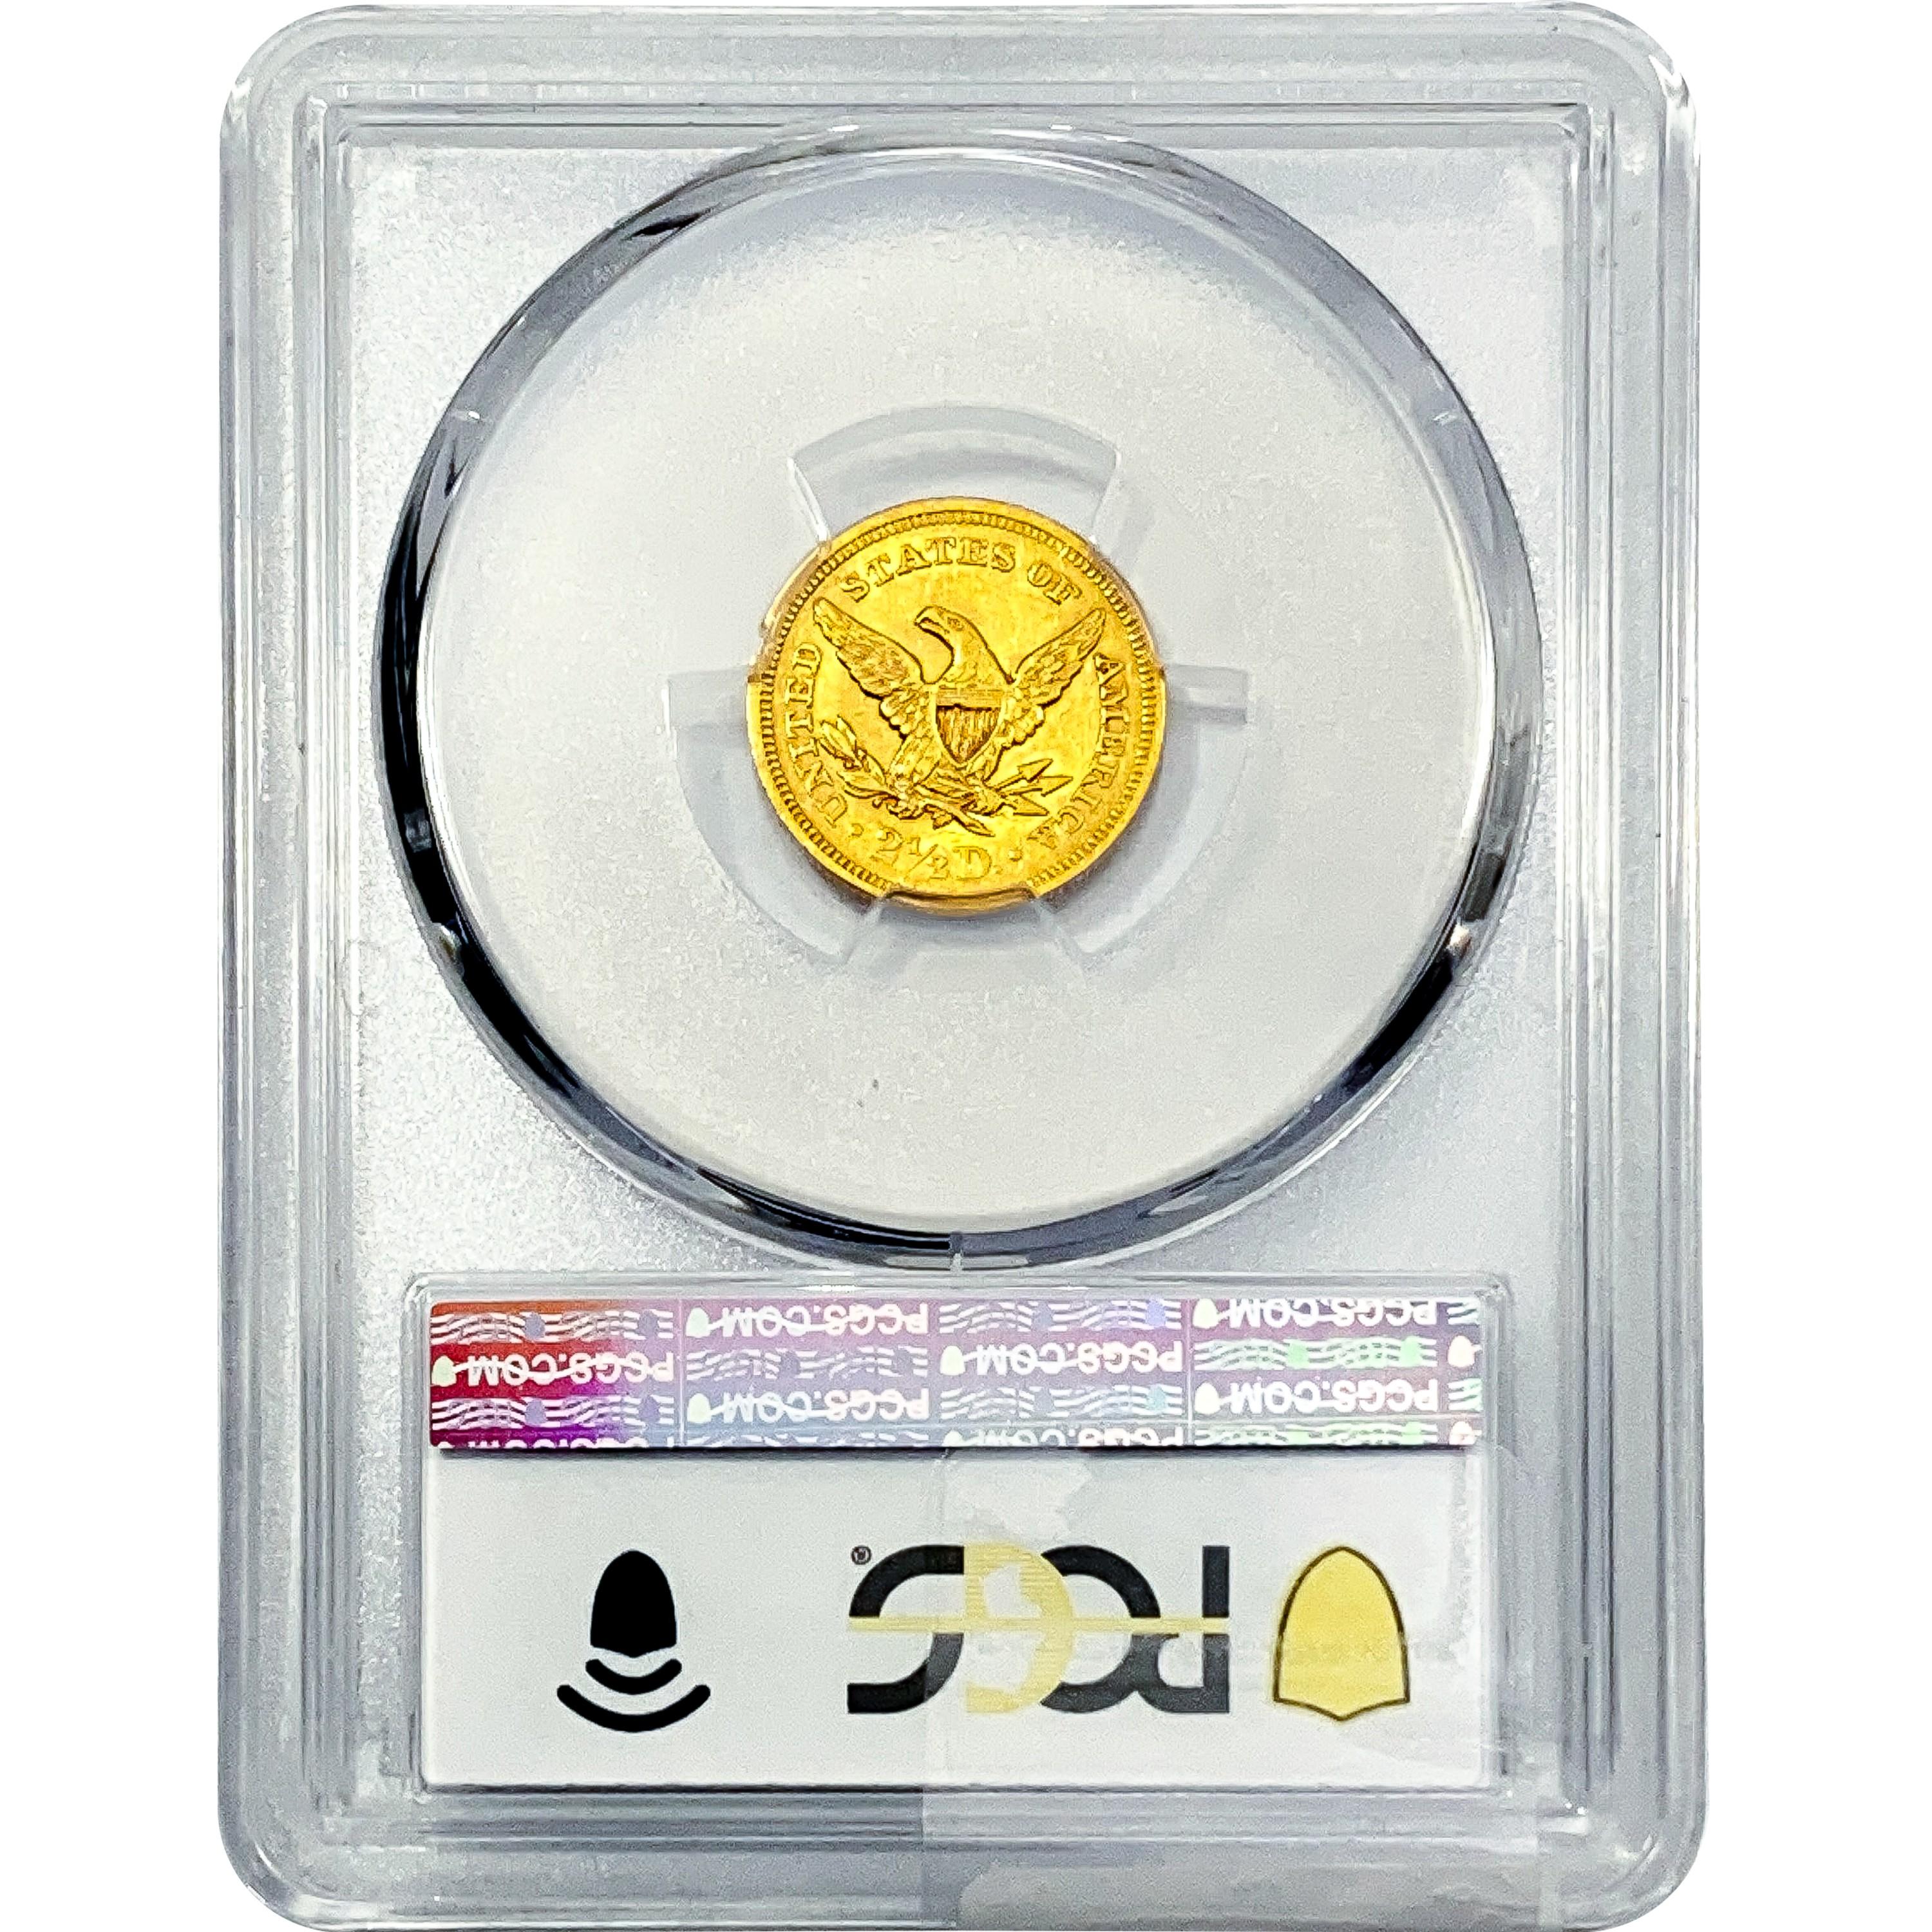 1854 $2.50 Gold Quarter Eagle PCGS AU55